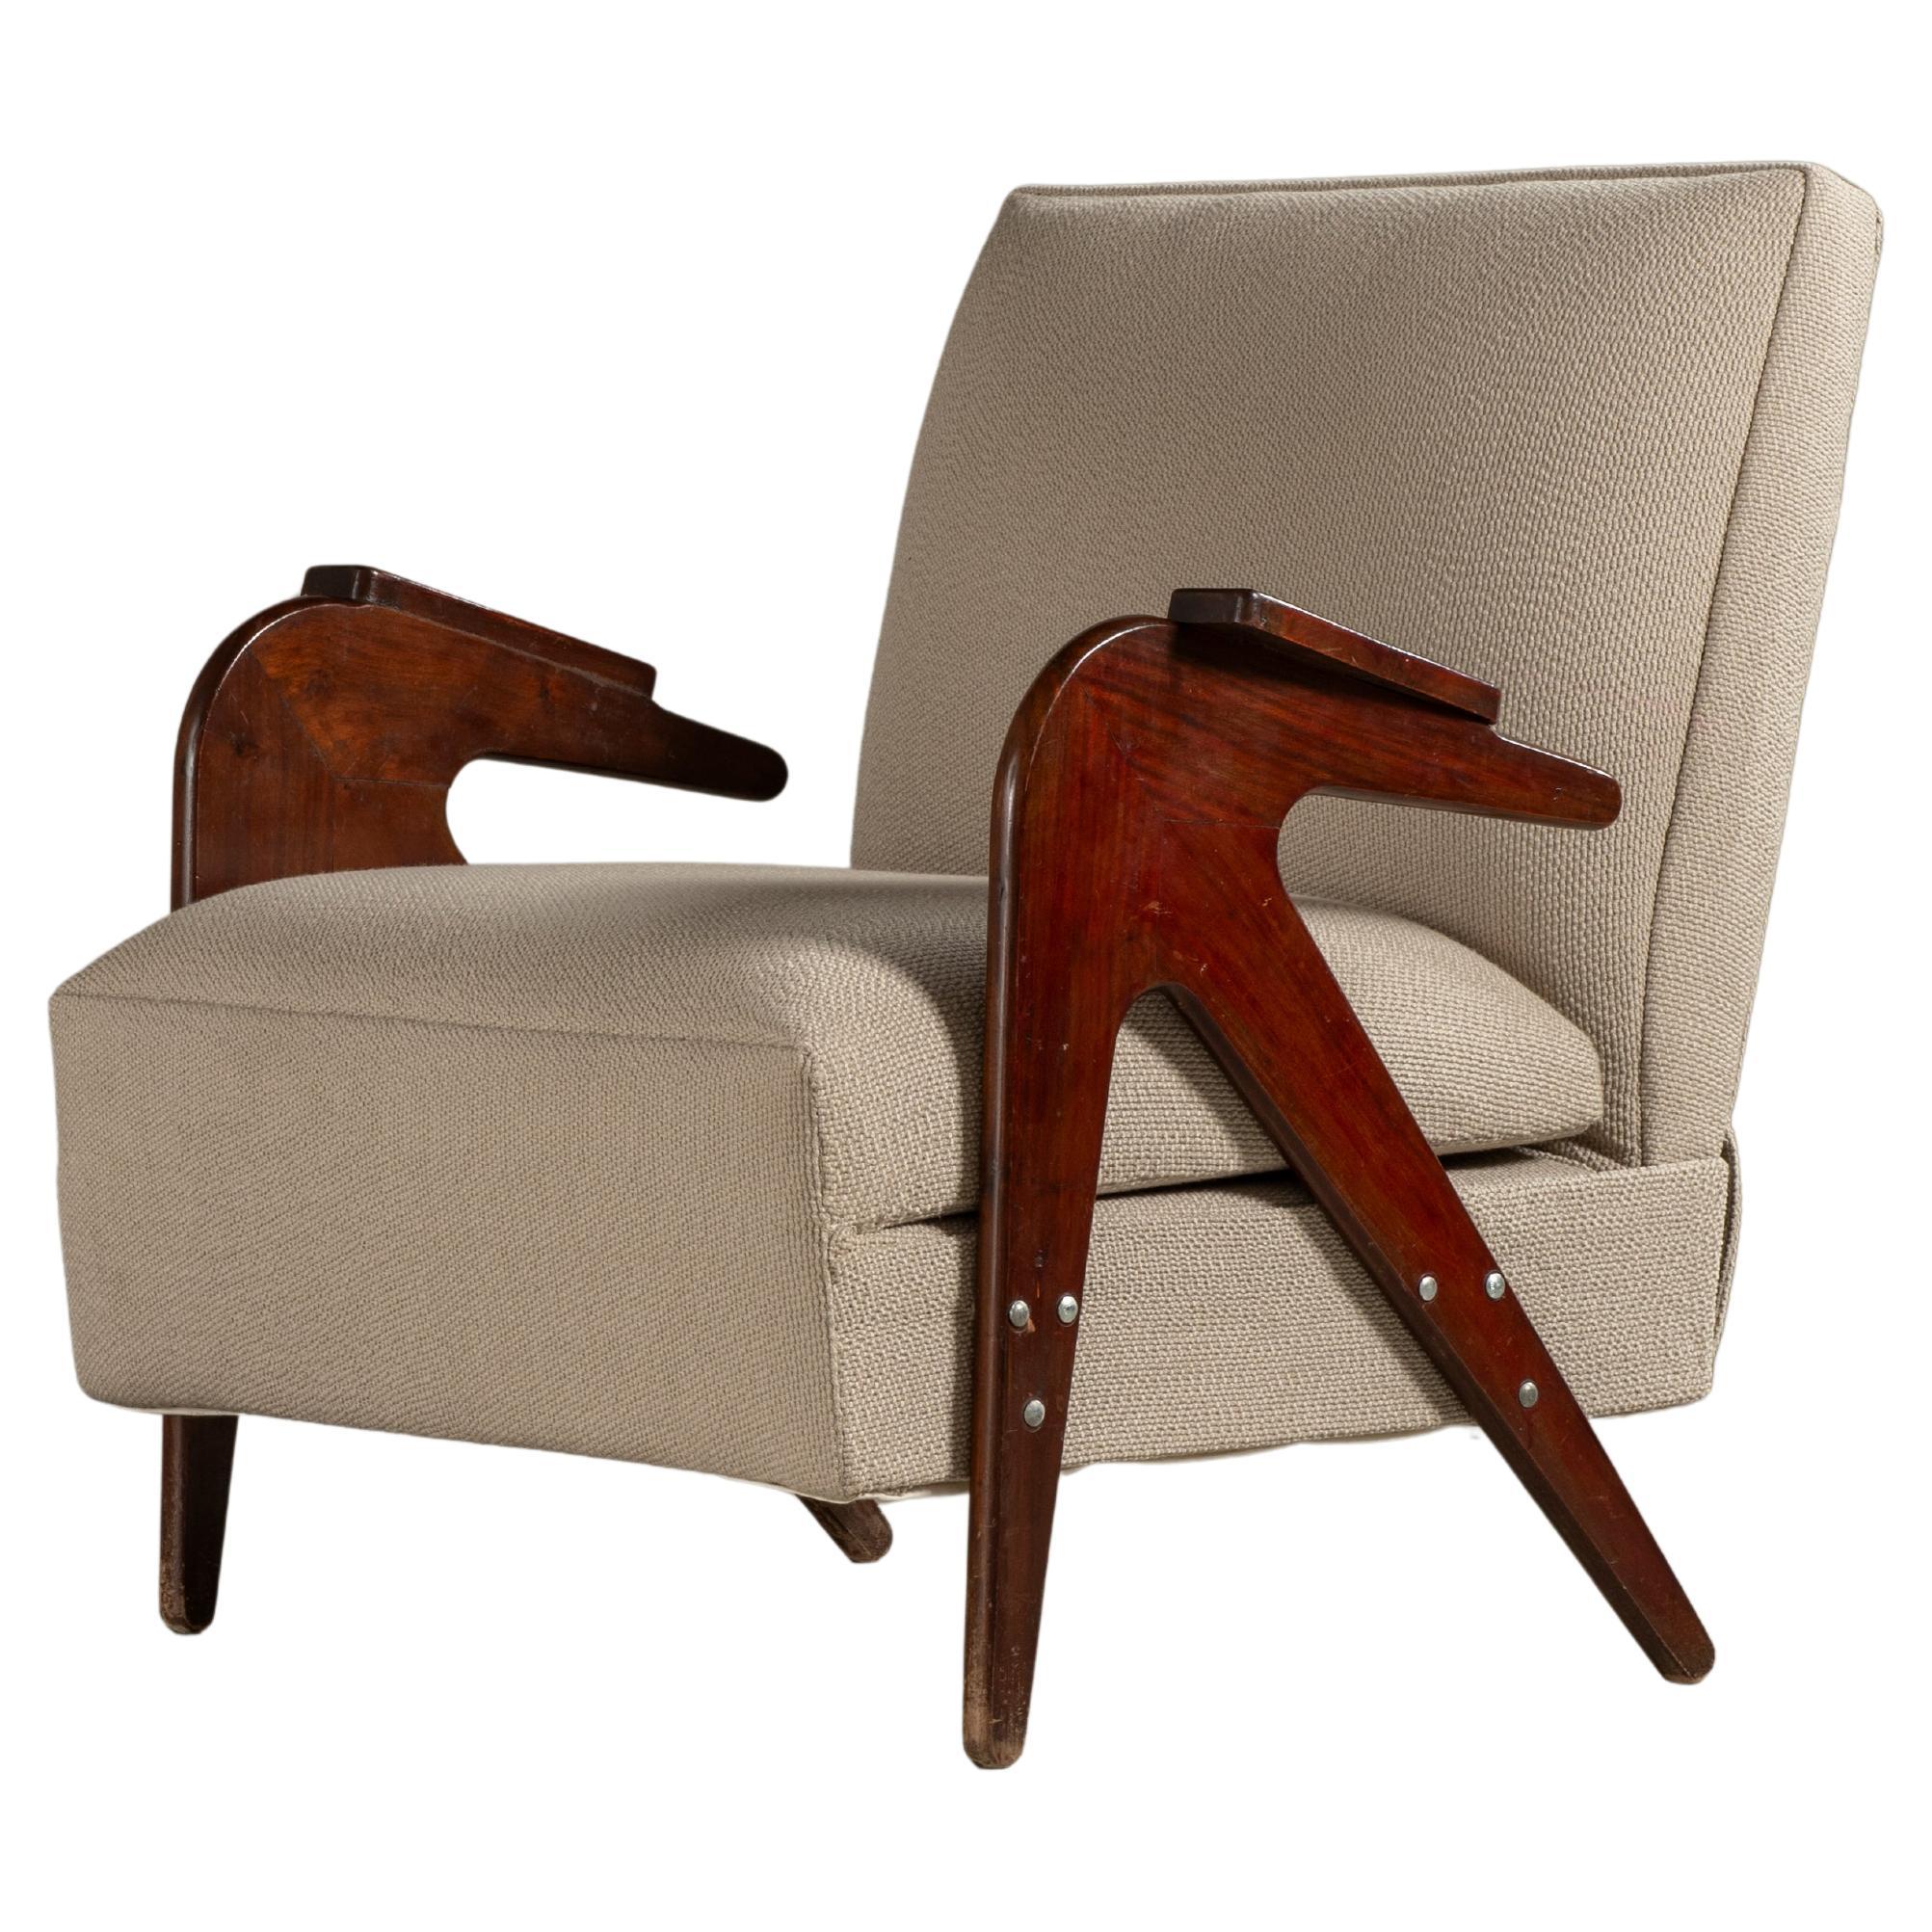 'Tridente' Lounge Chair, by Móveis Drago, Brazilian Mid-Century Modern Design For Sale